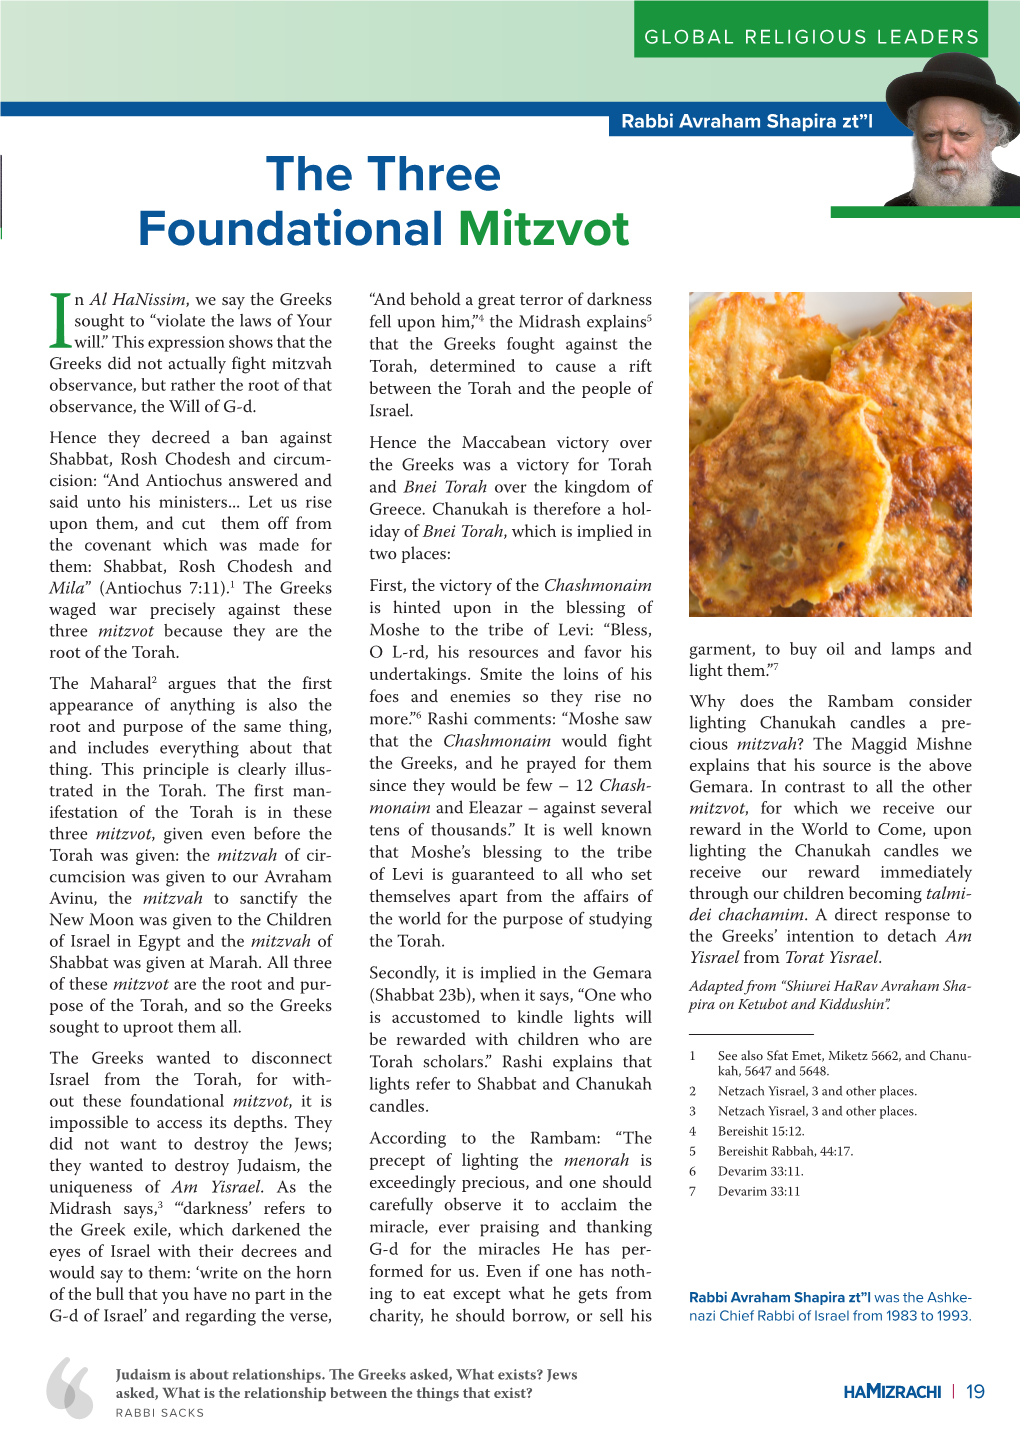 The Three Foundational Mitzvot